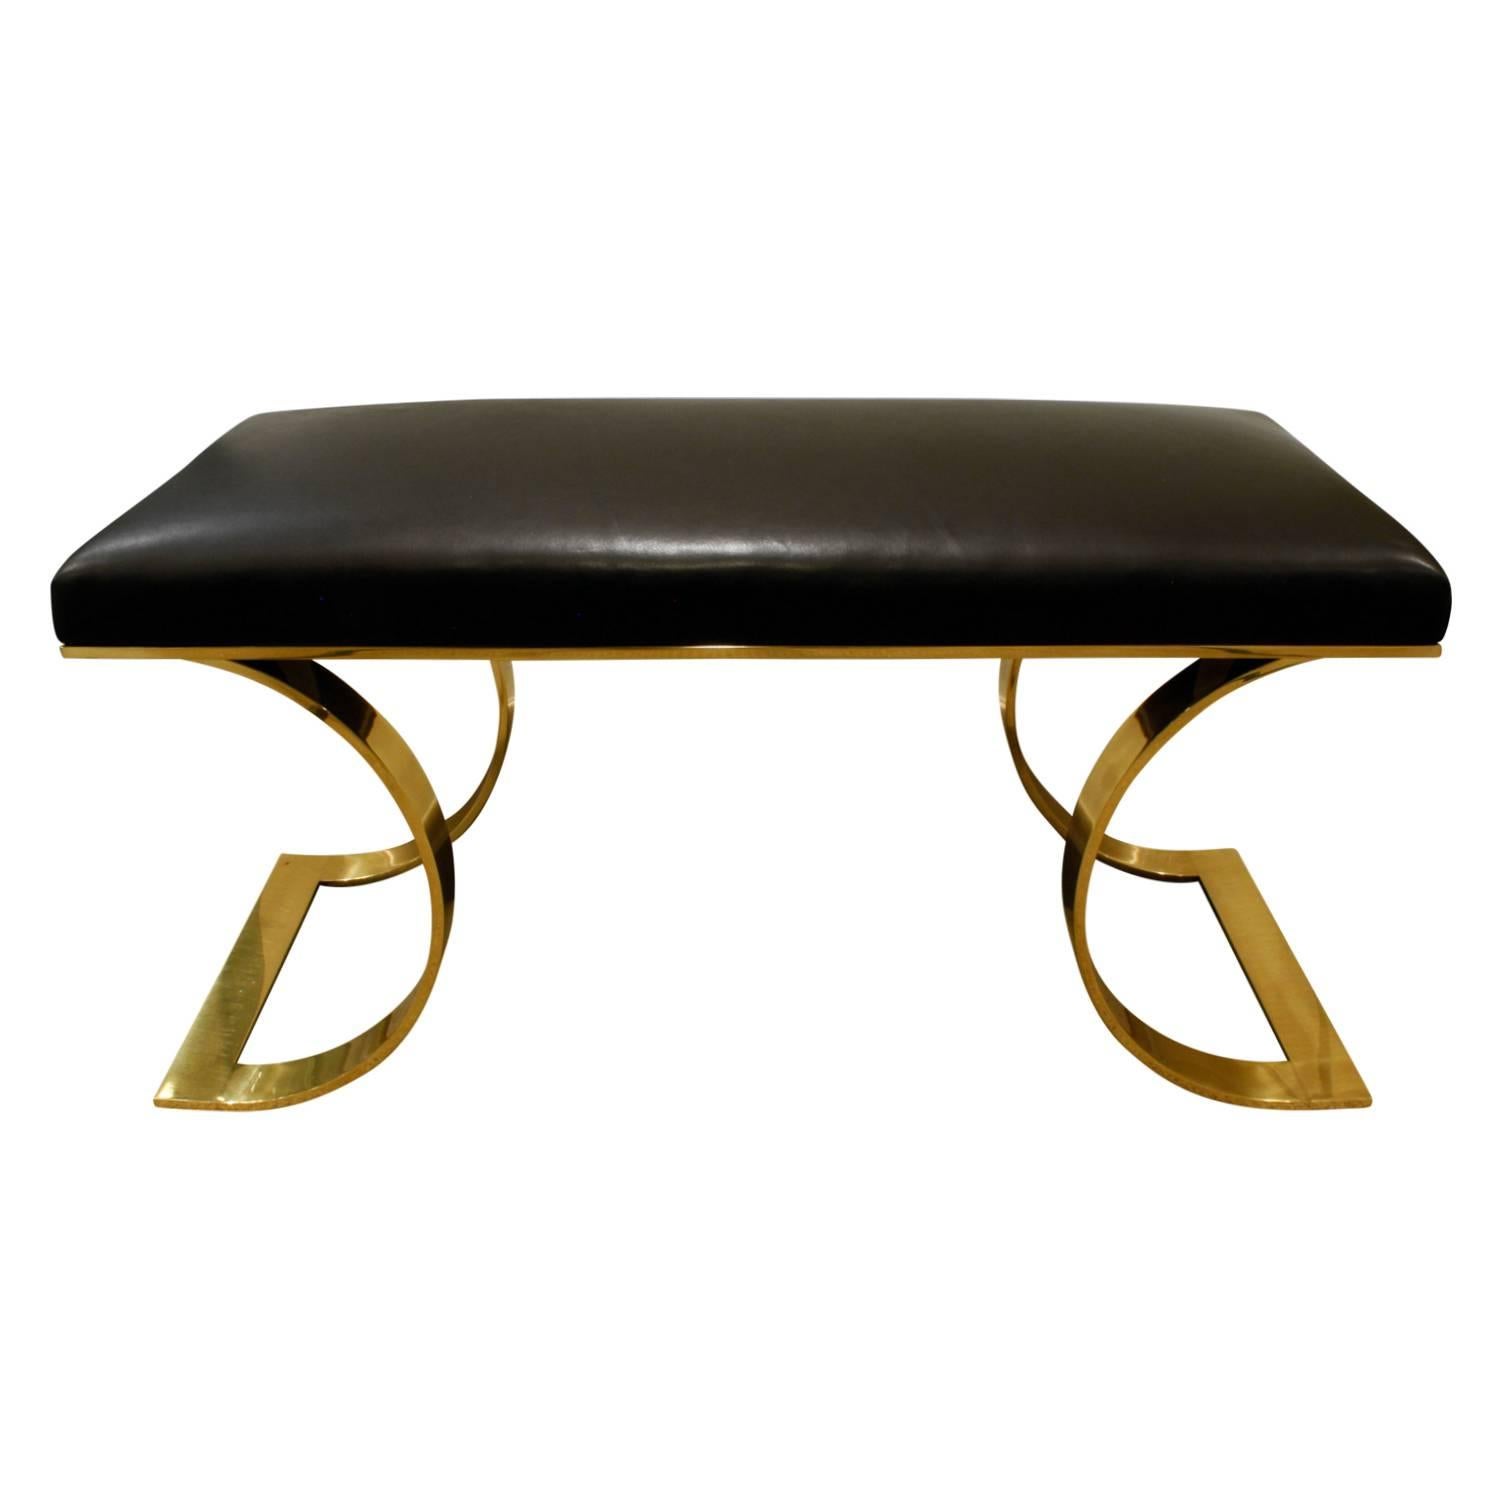 Karl Springer "JMF Curved Bench" in Brass with Black Leather, 1970s